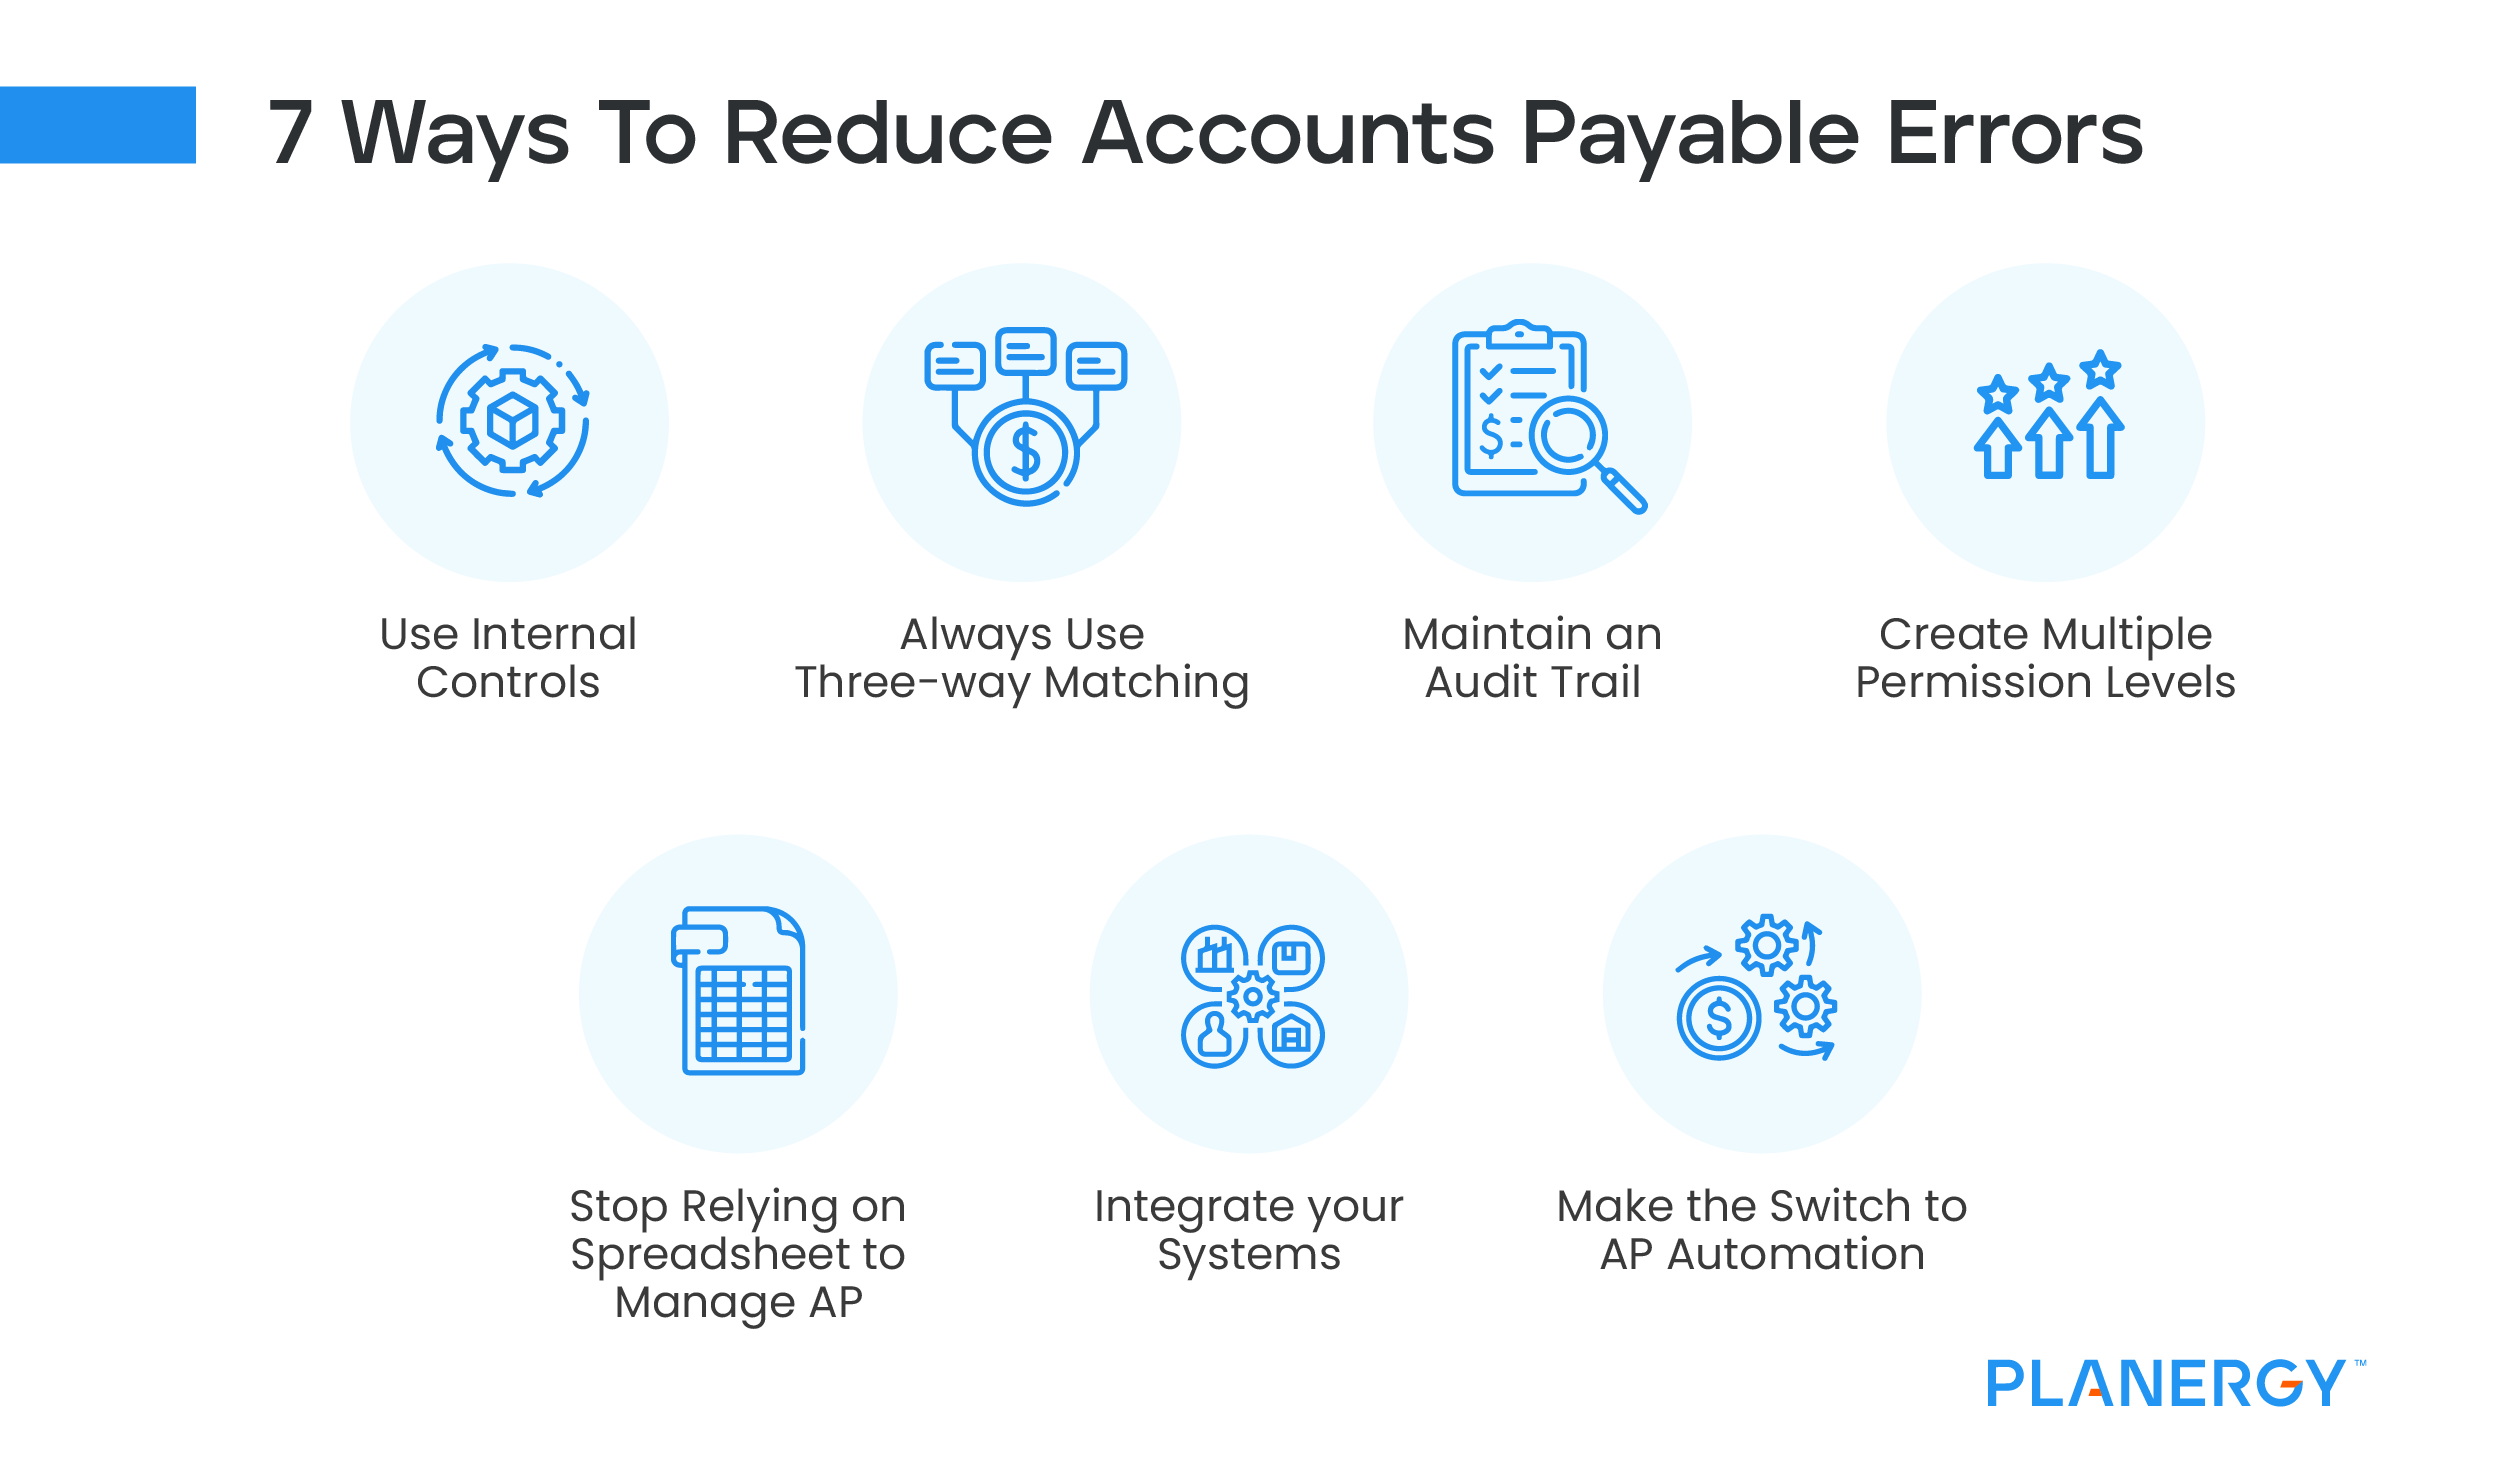 7 Ways to Reduce Accounts Payable Errors